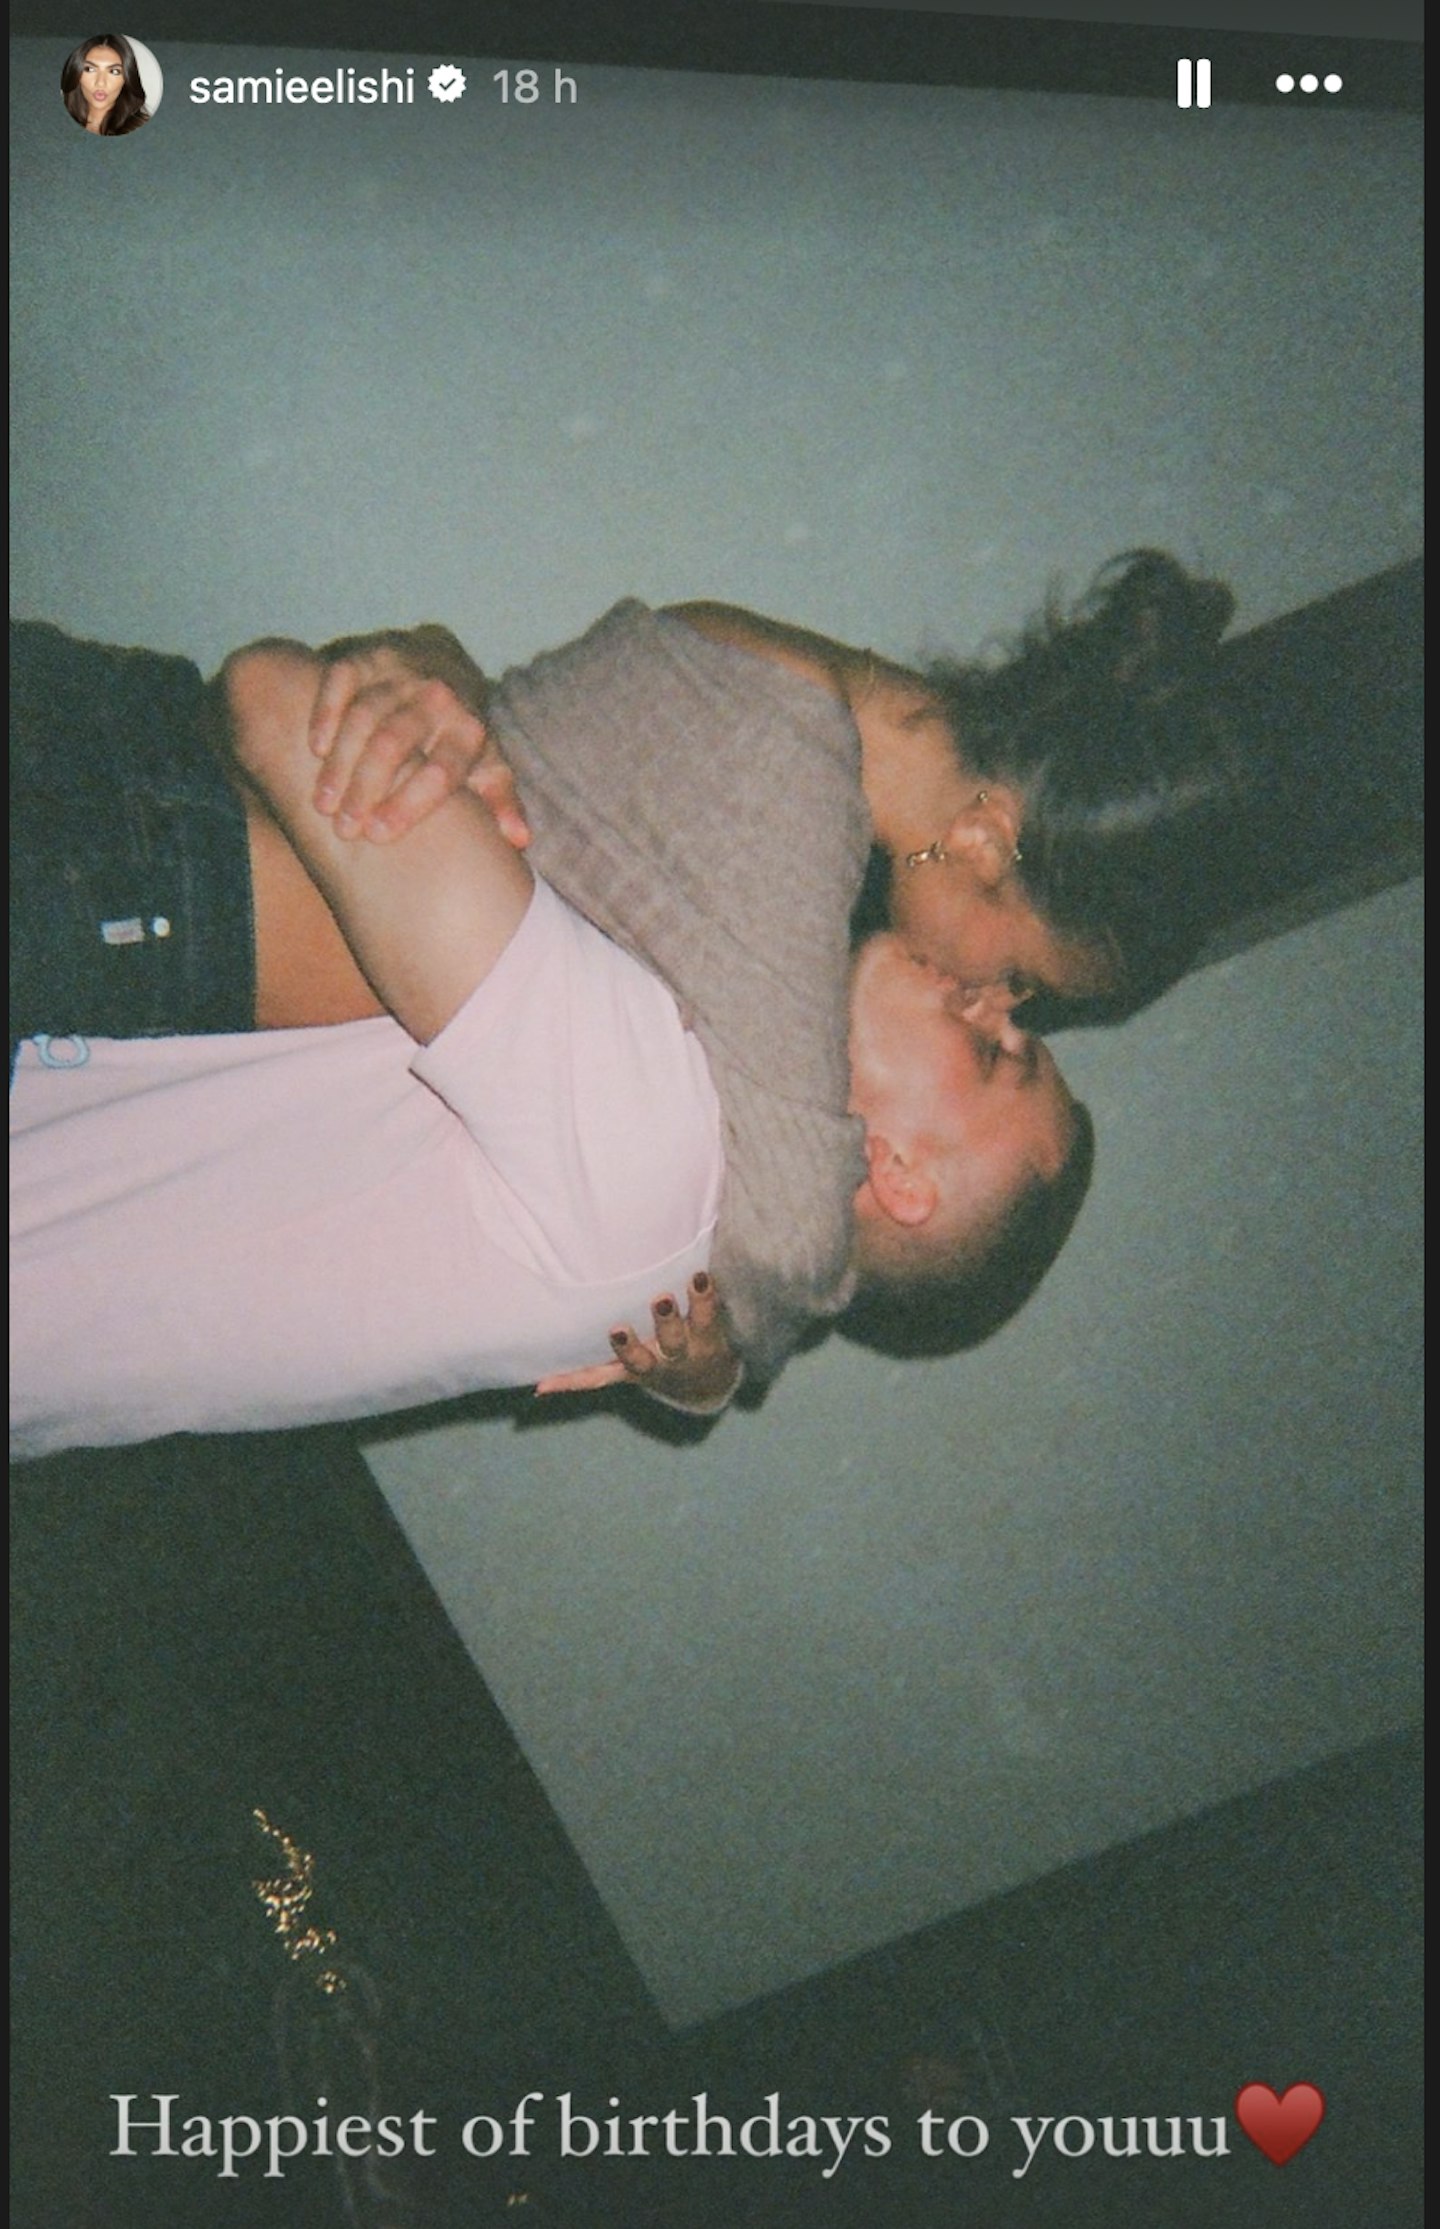 Samie Elishi and Harry Lee kissing